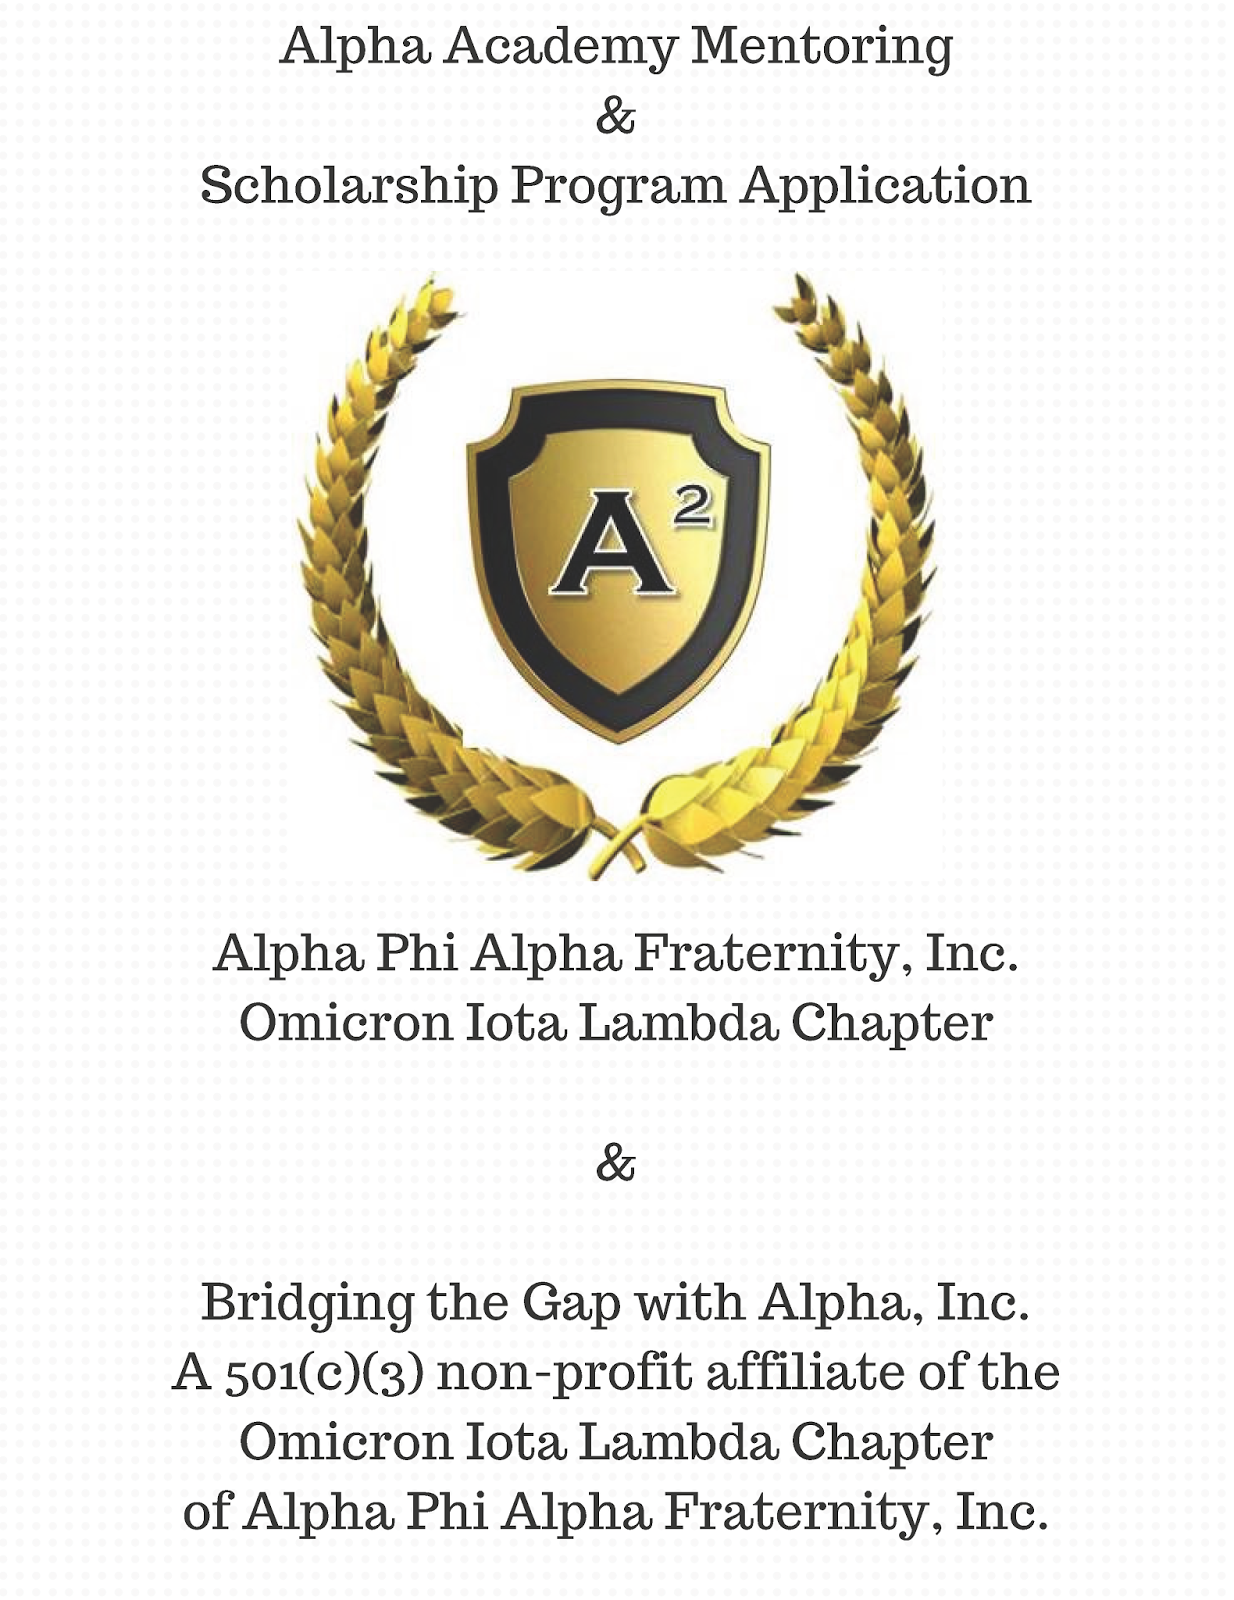 viking-update-alpha-academy-mentoring-scholarship-program